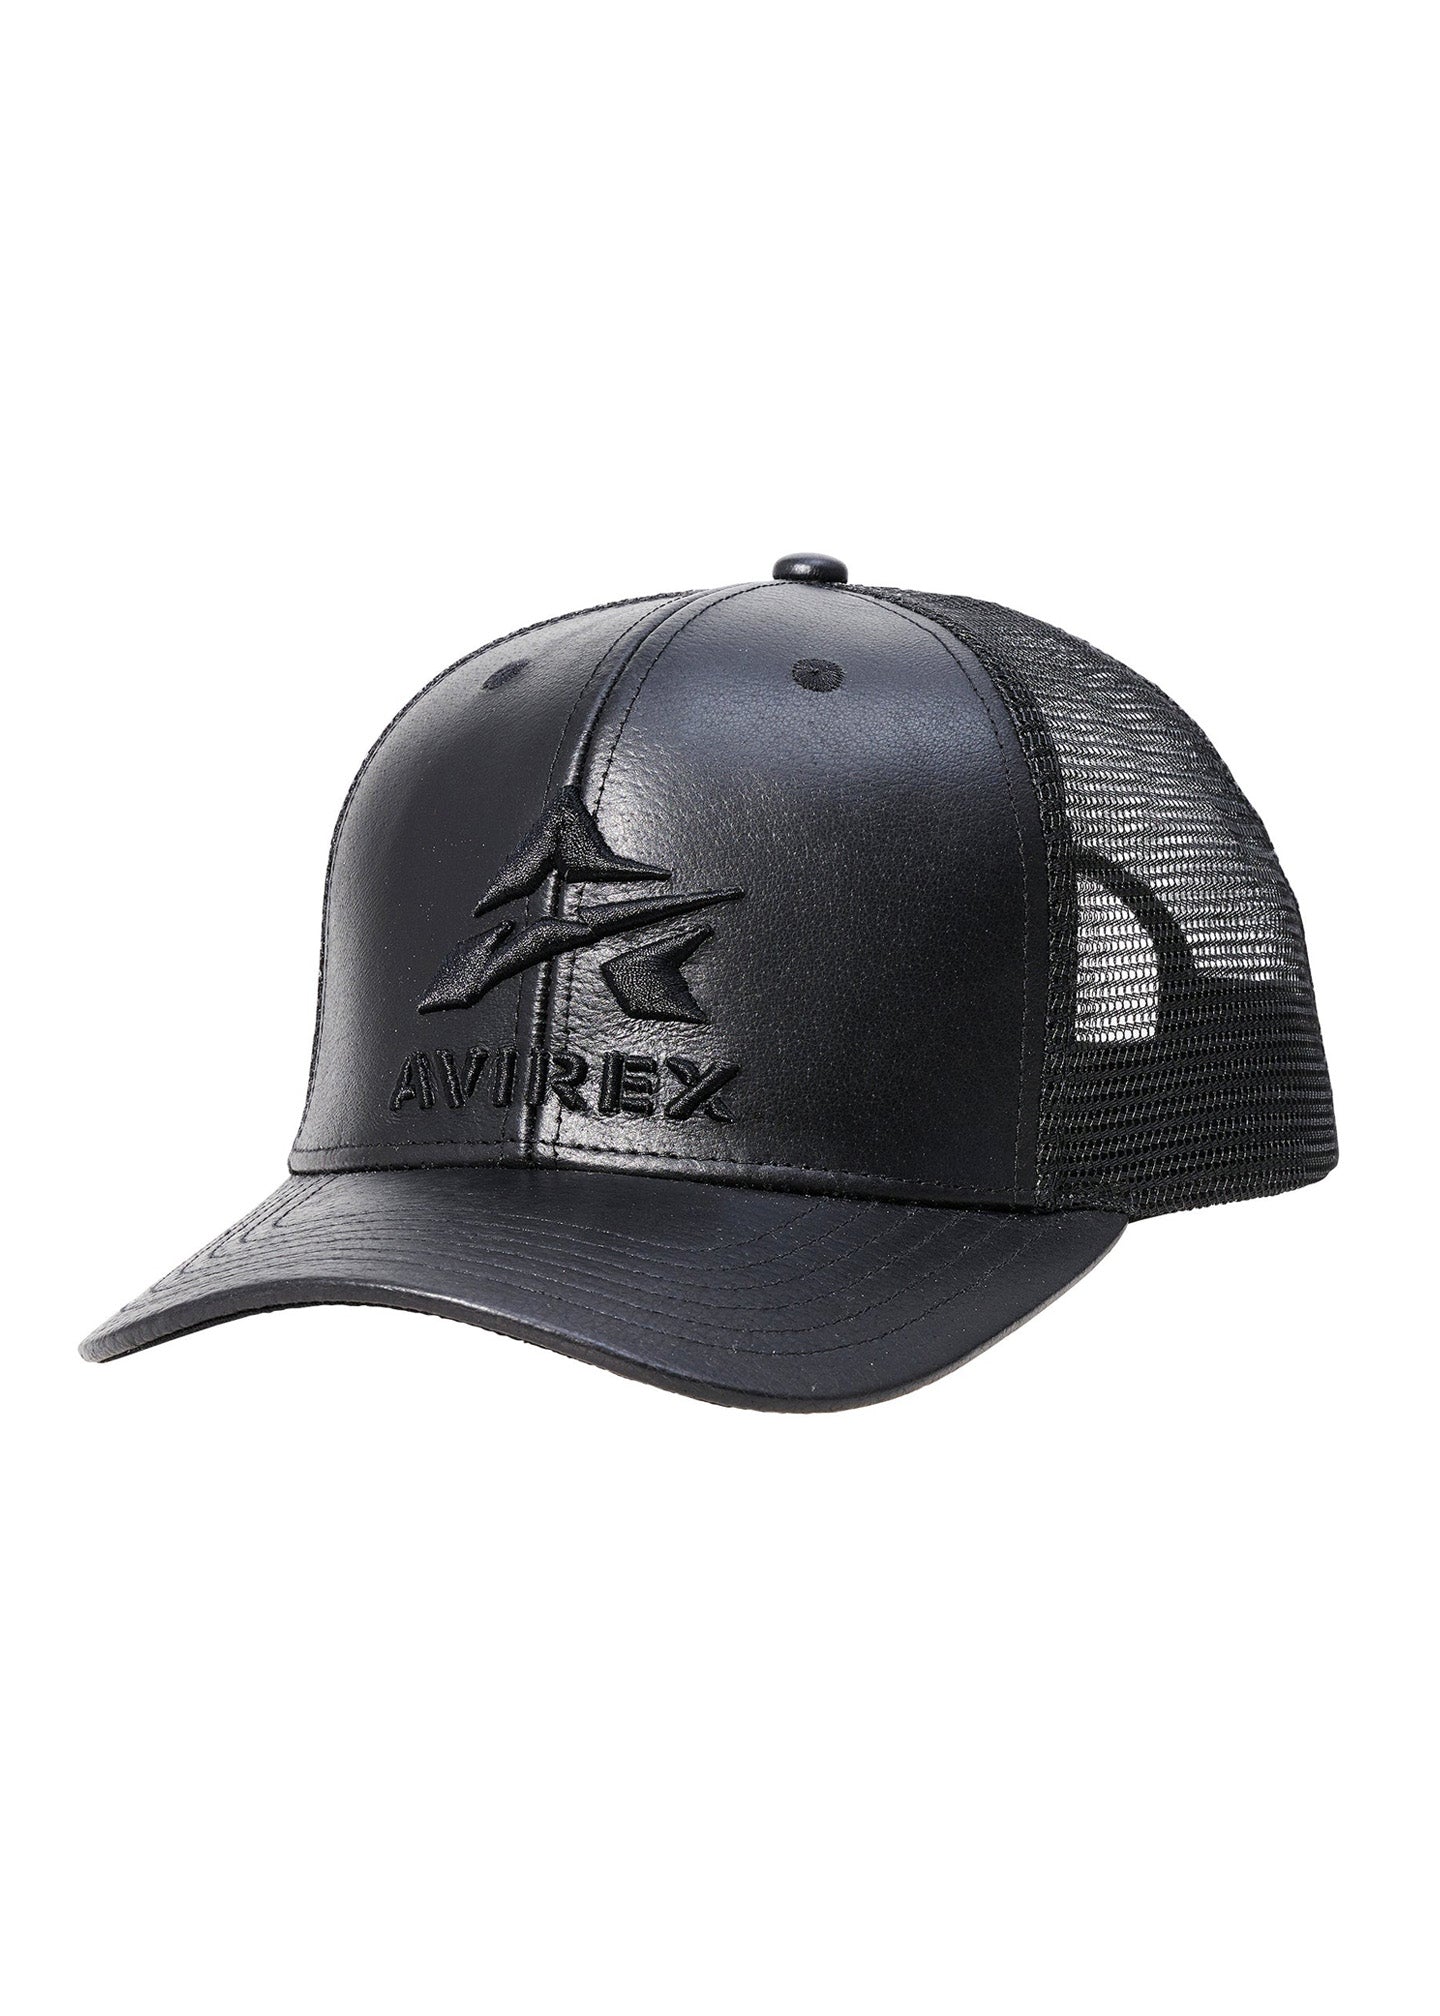 Avirex Leather Mesh Hat - Black - Front